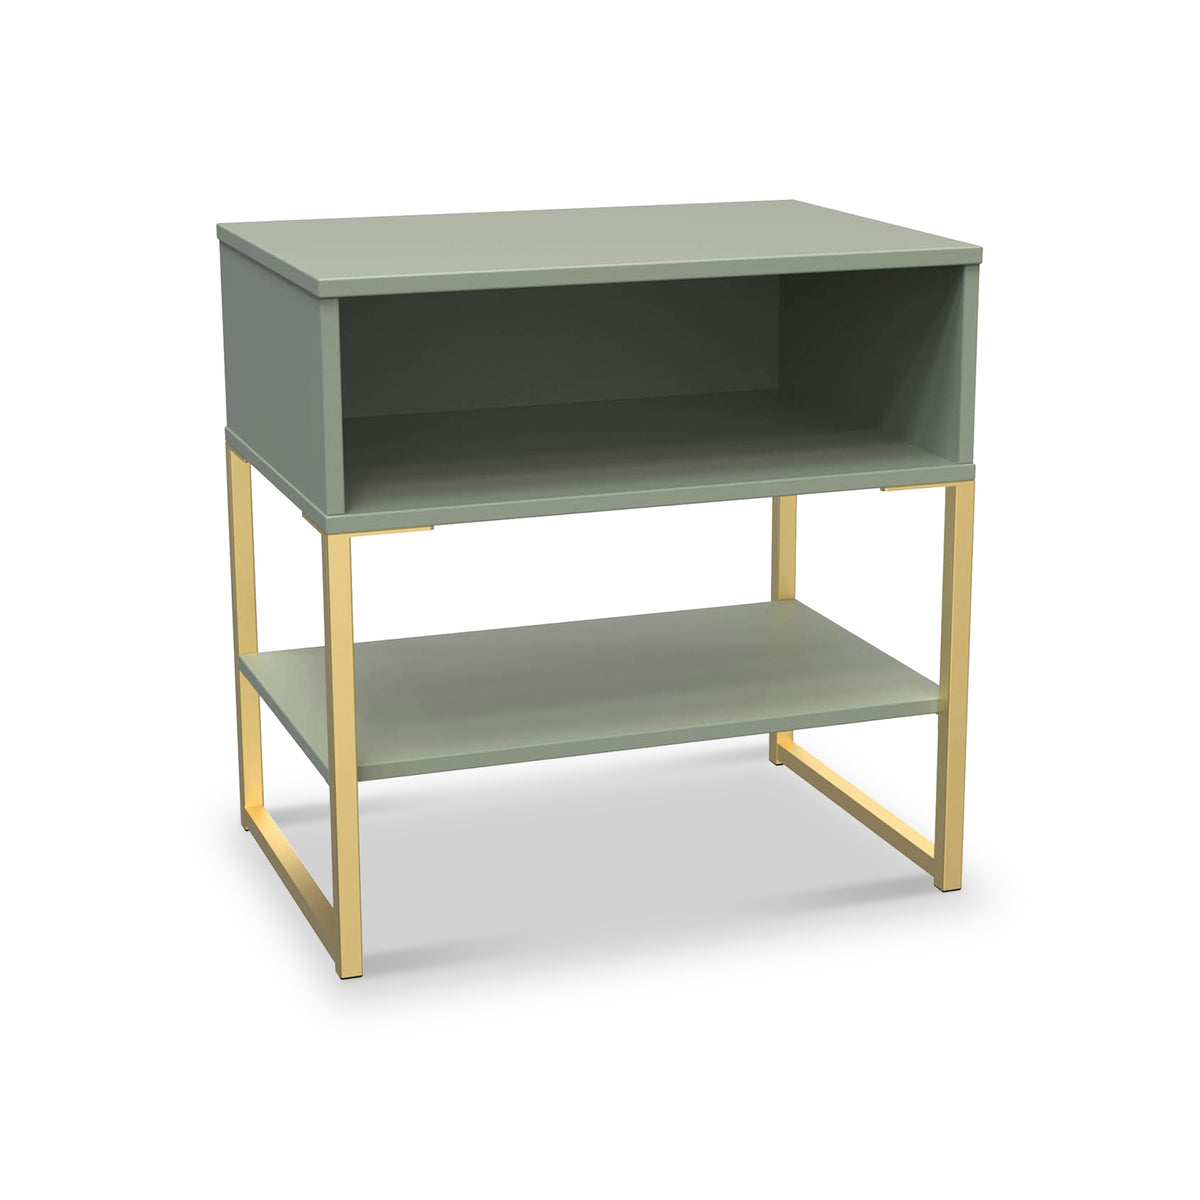 Hudson Olive Open Drawer Bedside with Lower Shelf from Roseland Furniture